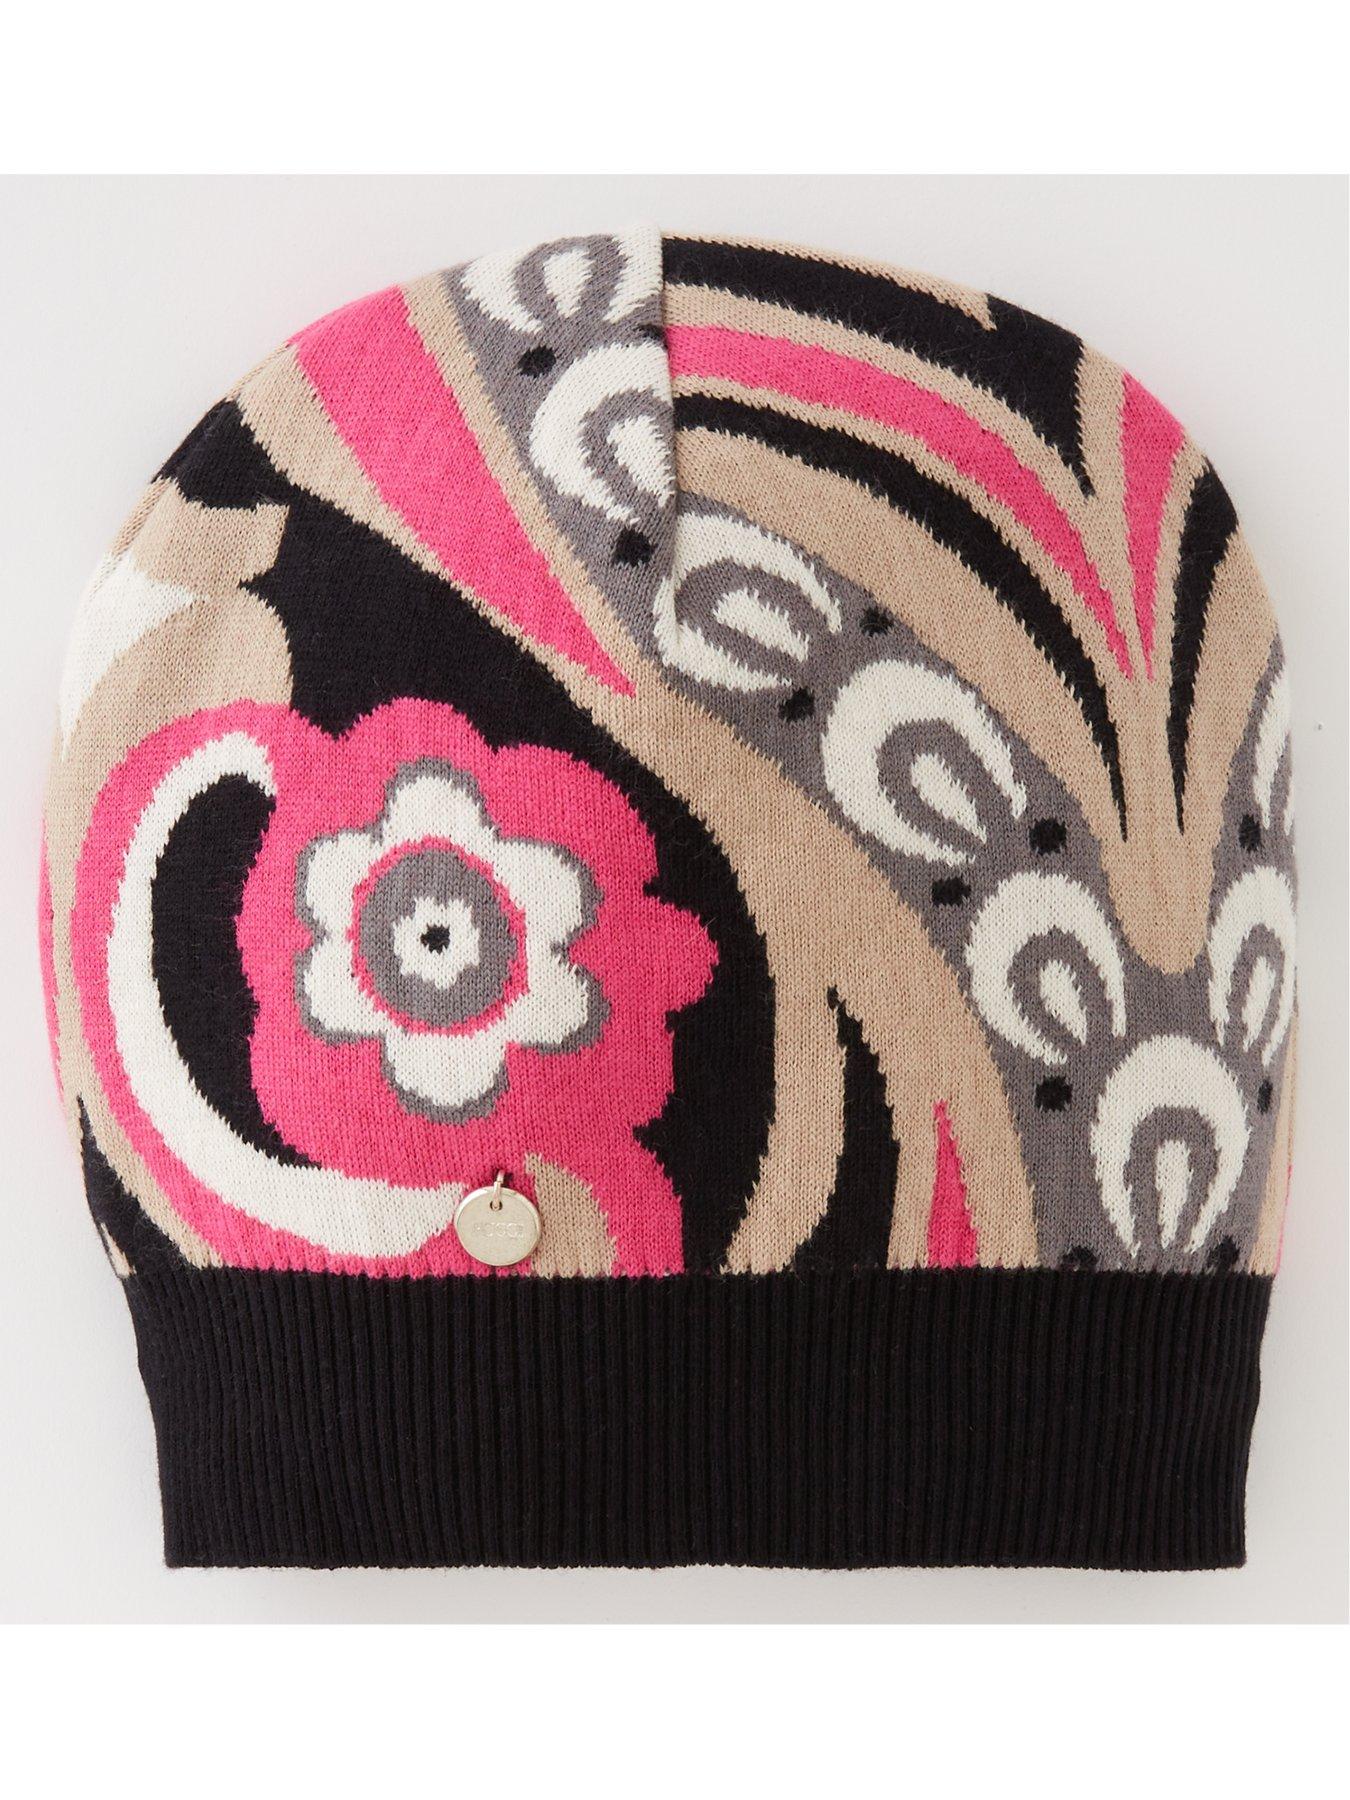  Printed Winter Hat - Pink